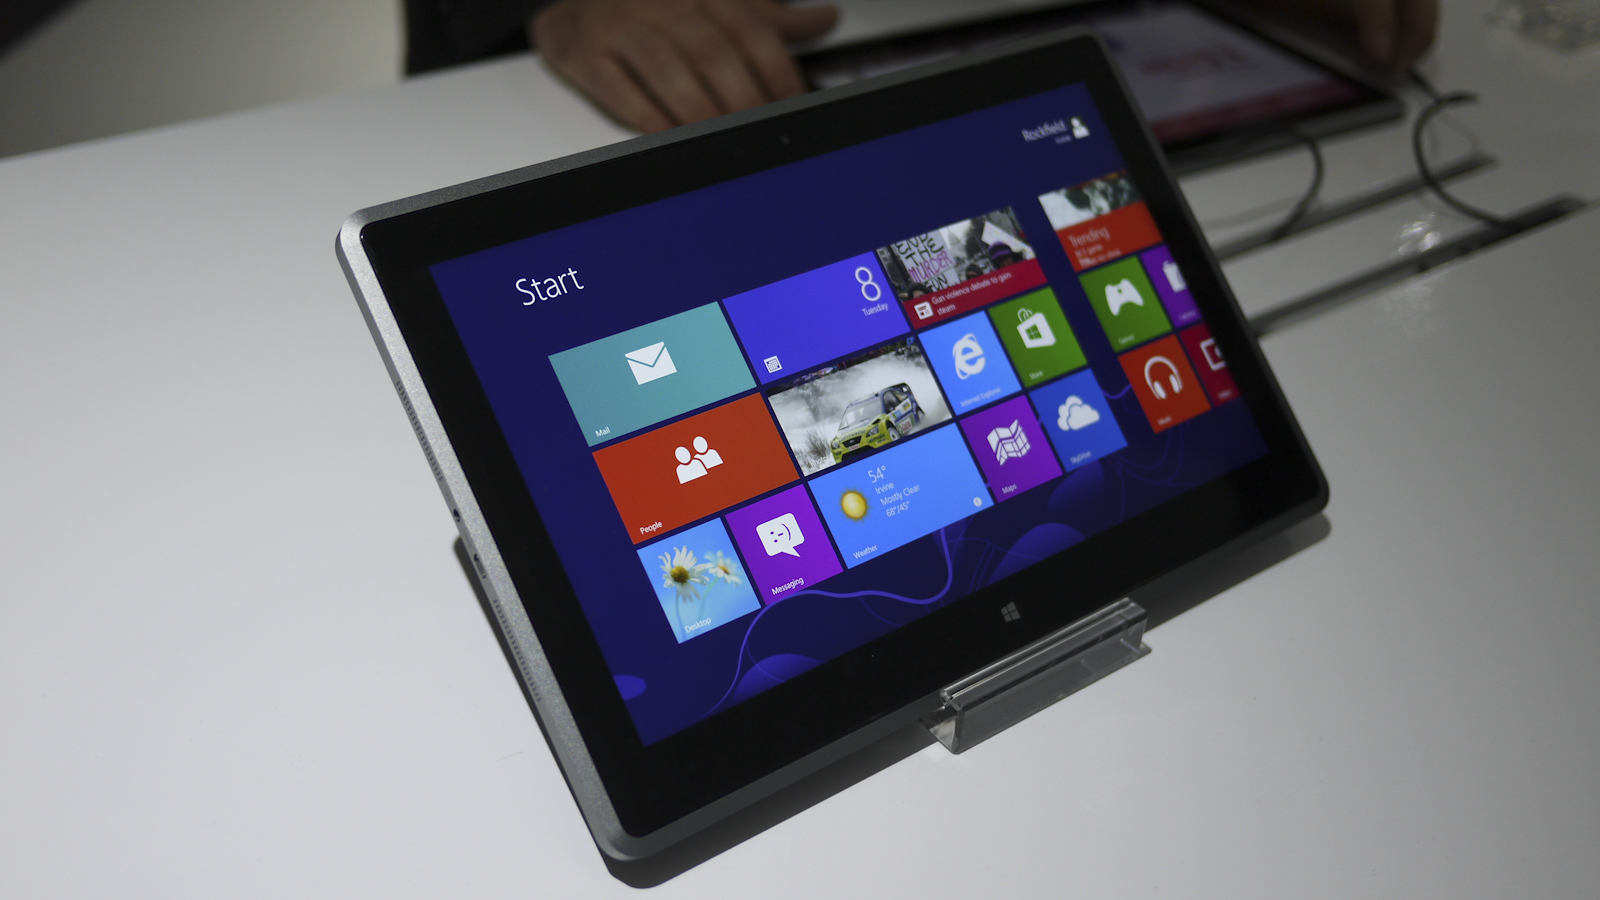 Vizio's AMD Z60 Hondo-based Windows 8 Tablet PC at CES 2013